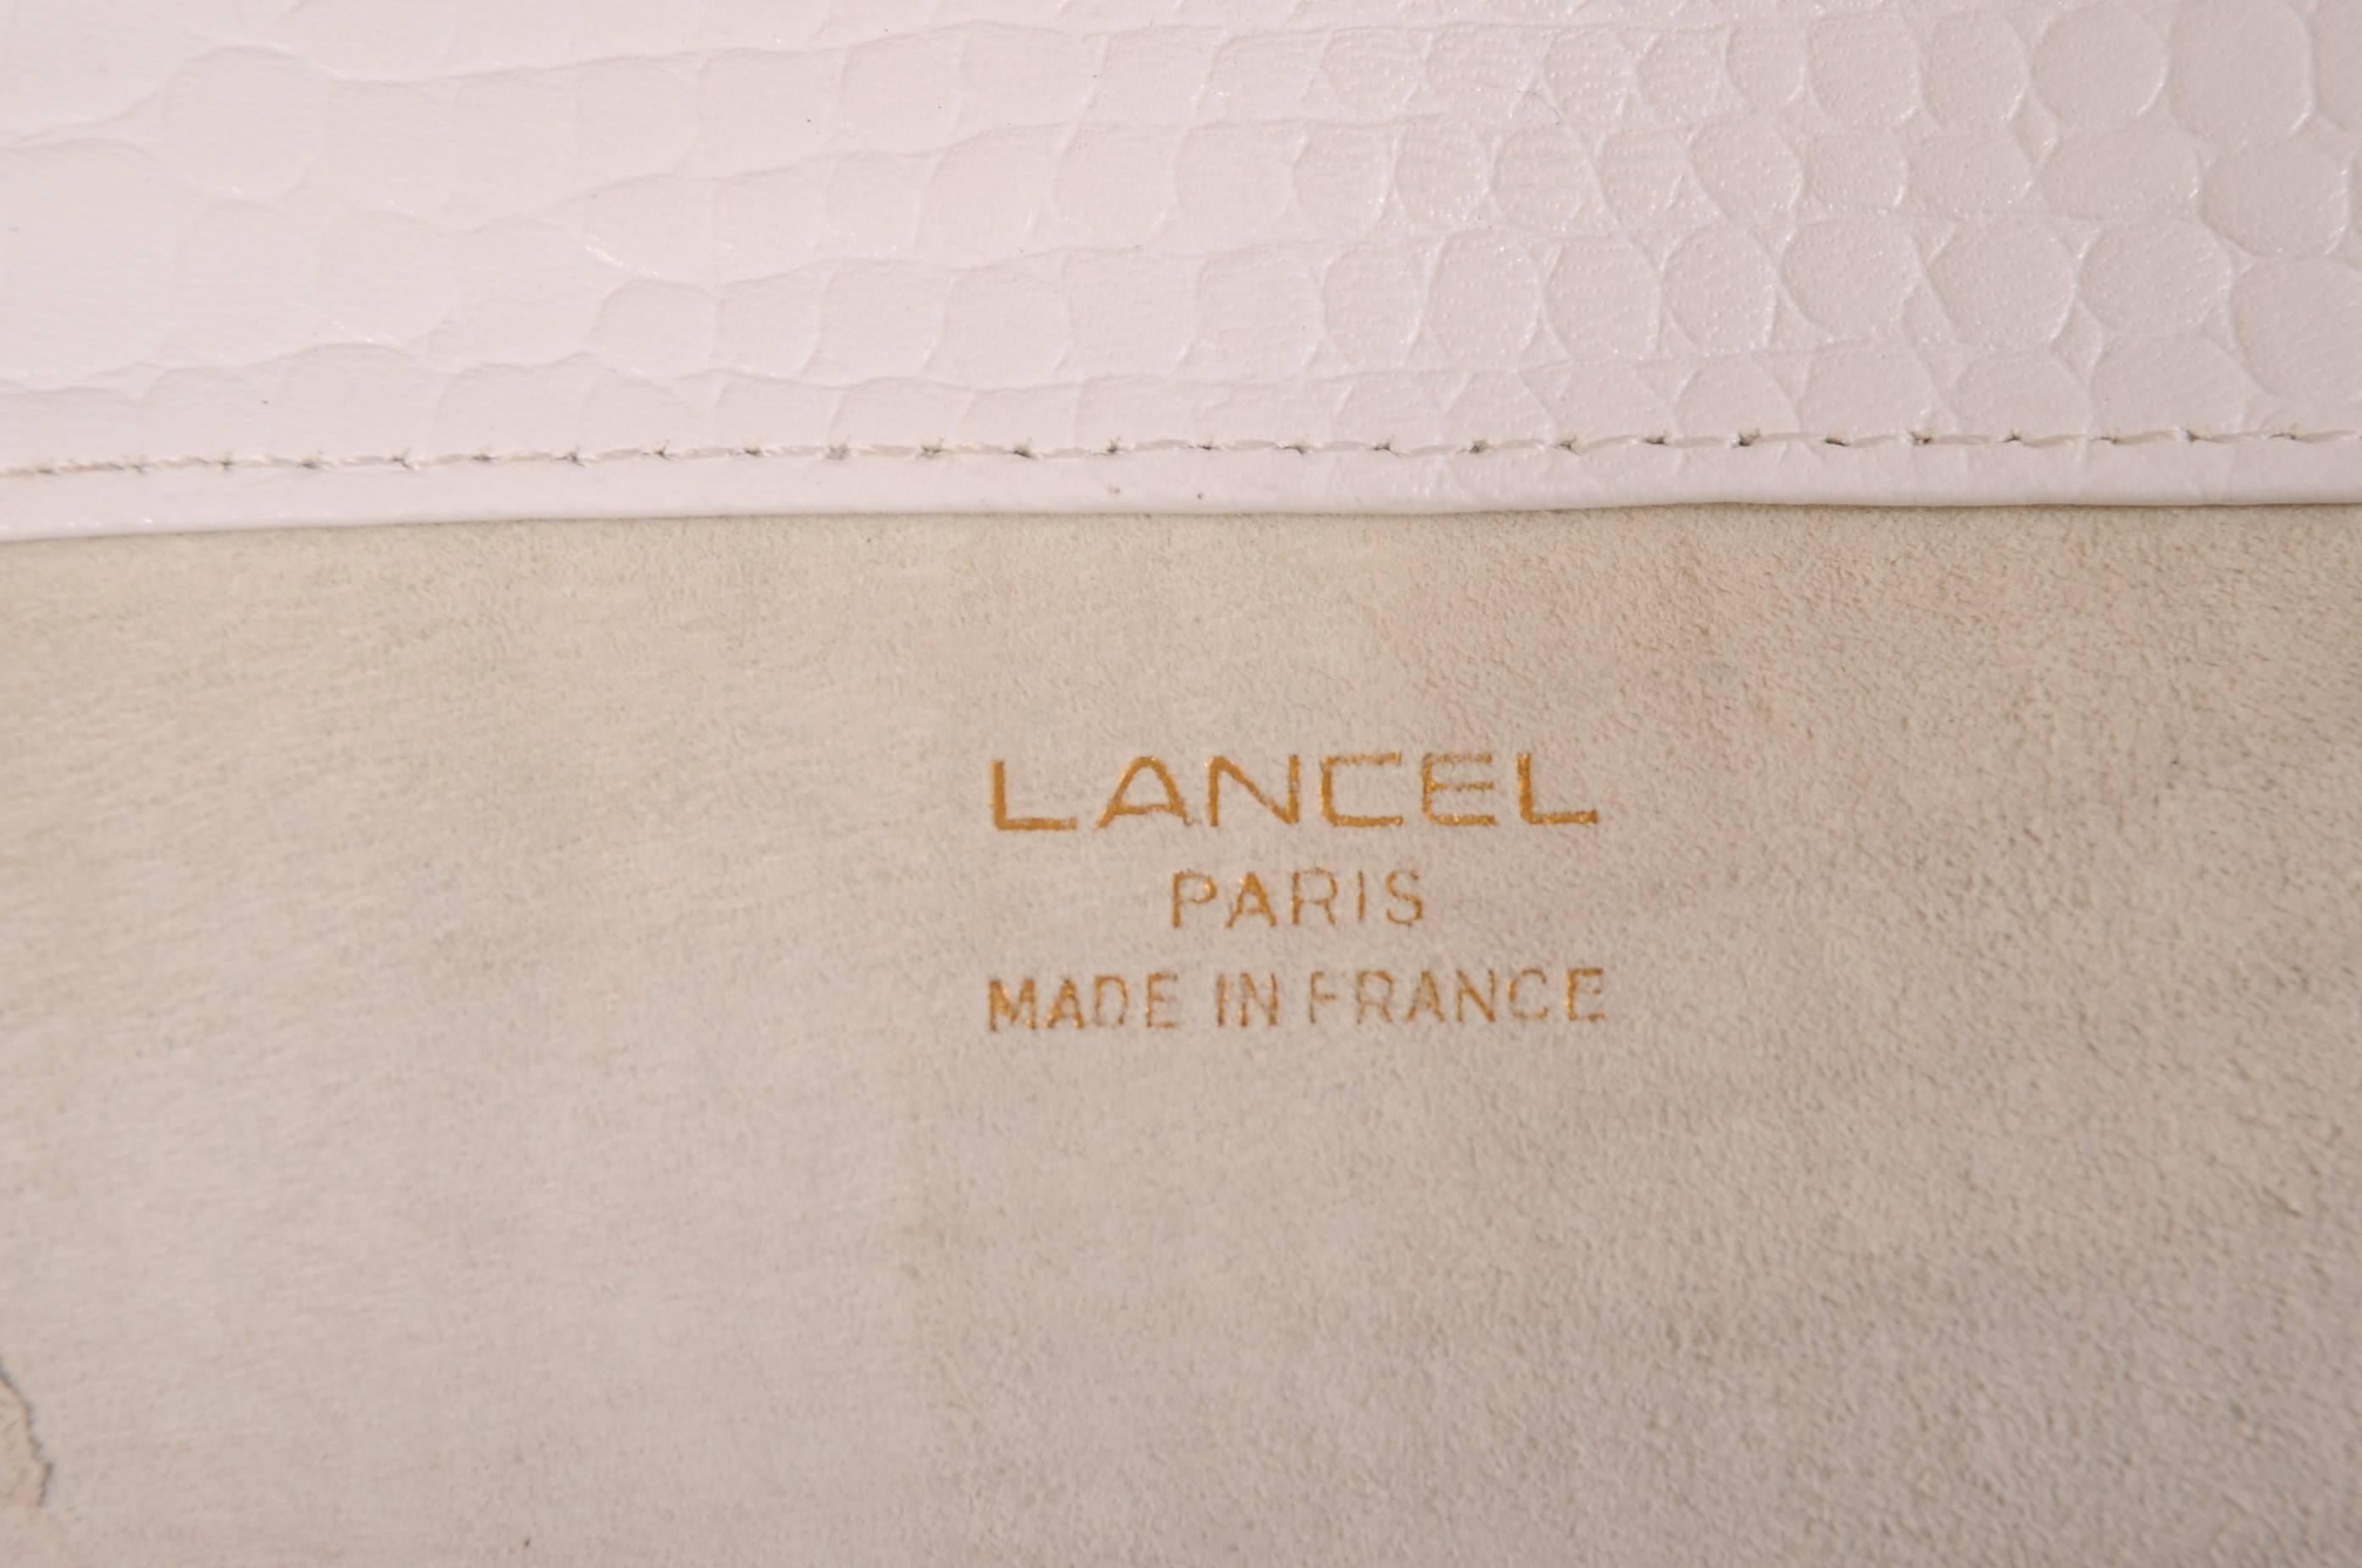 Gray Lancel, Paris White Leather Alligator Pattern Tote, Never Used